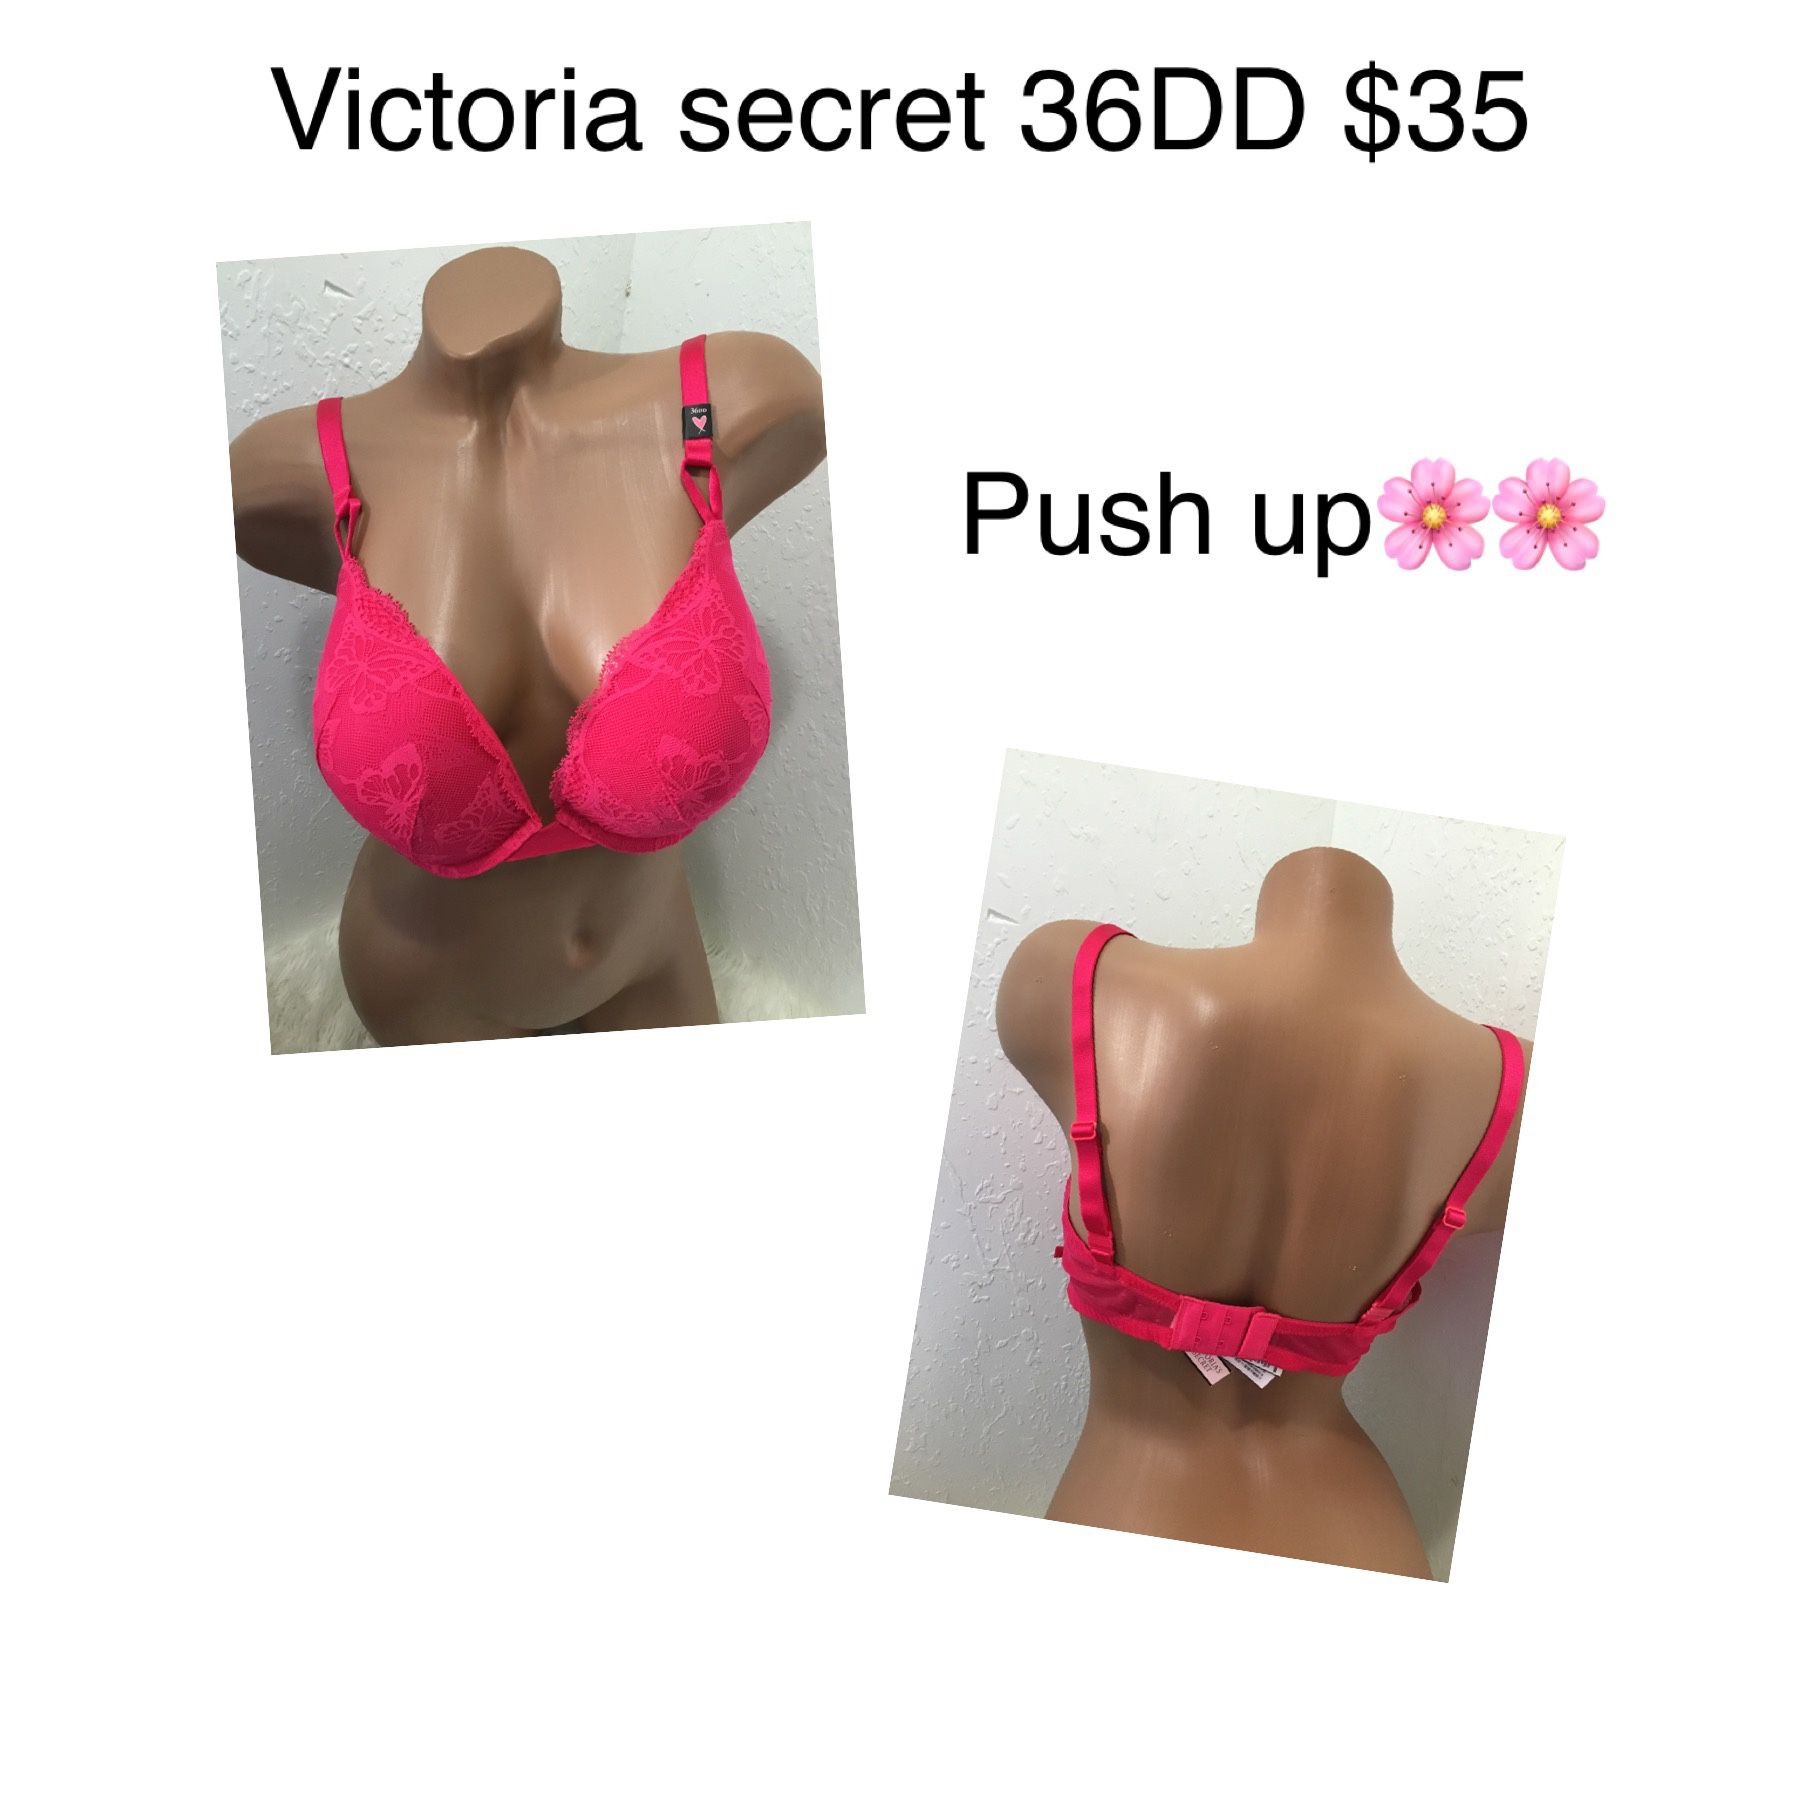 New Bra Victoria Secret 36dd Push Up firm Price for Sale in Los